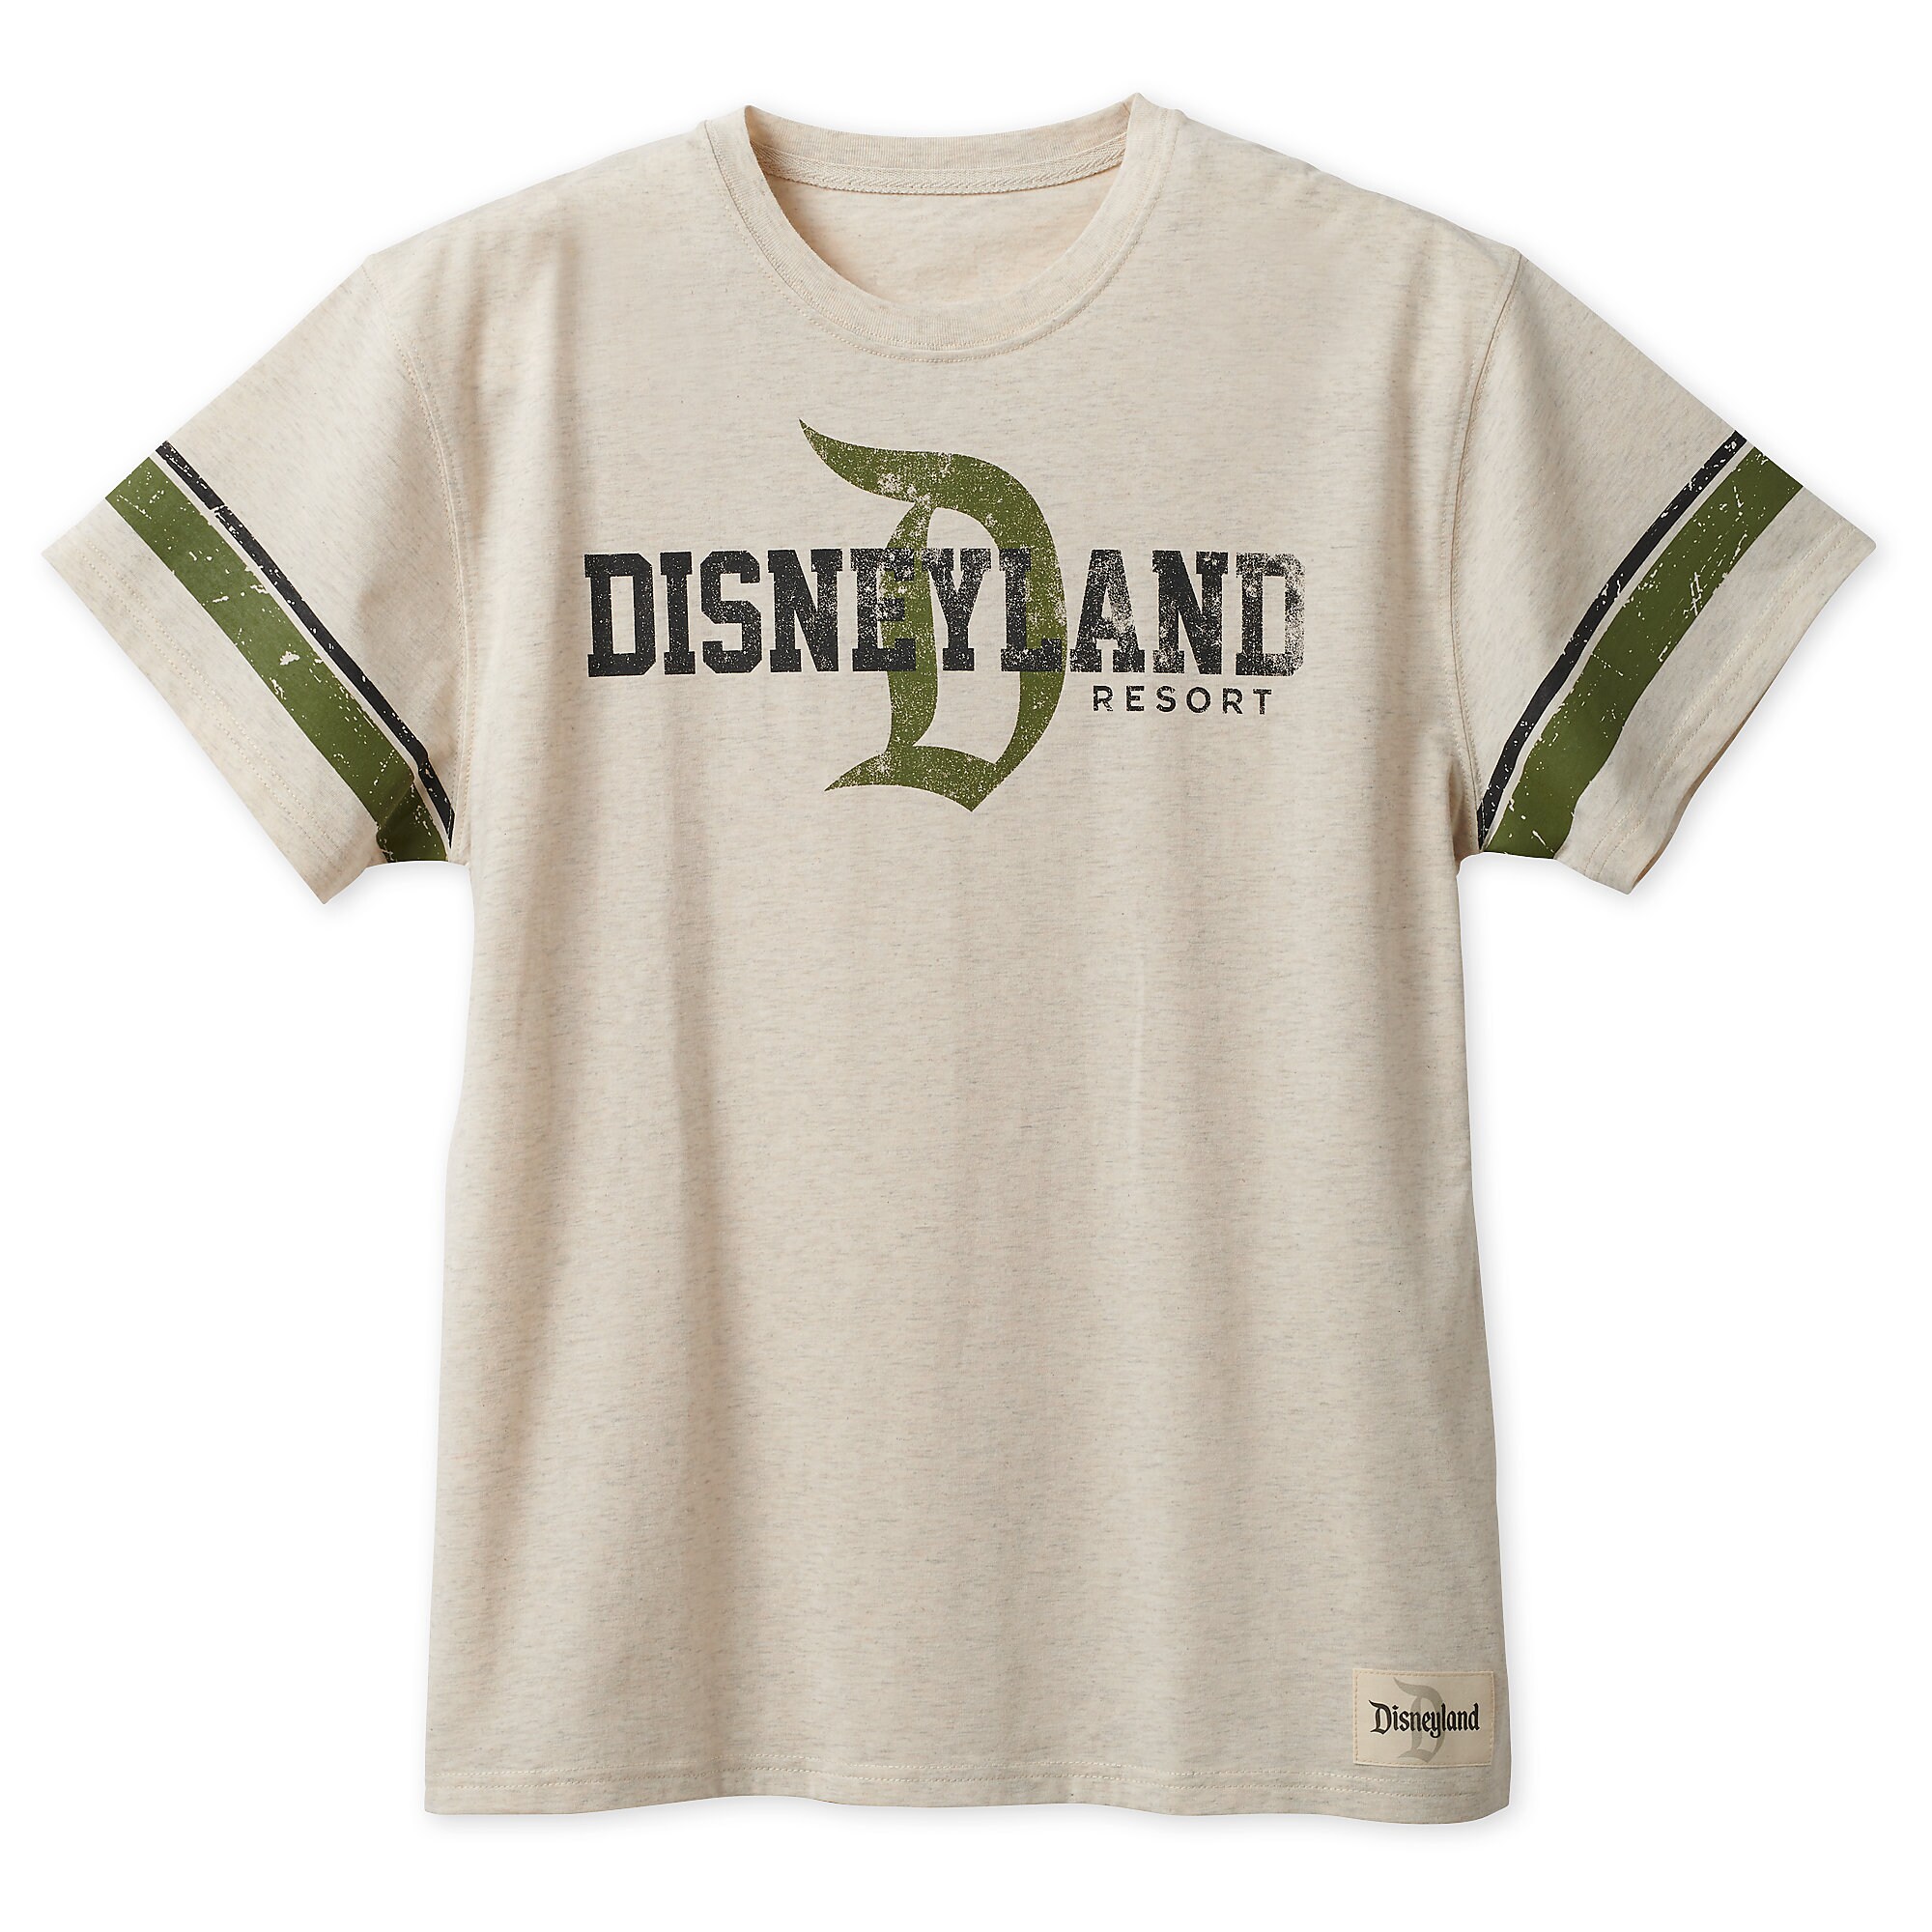 Disneyland Athletic T-Shirt for Men